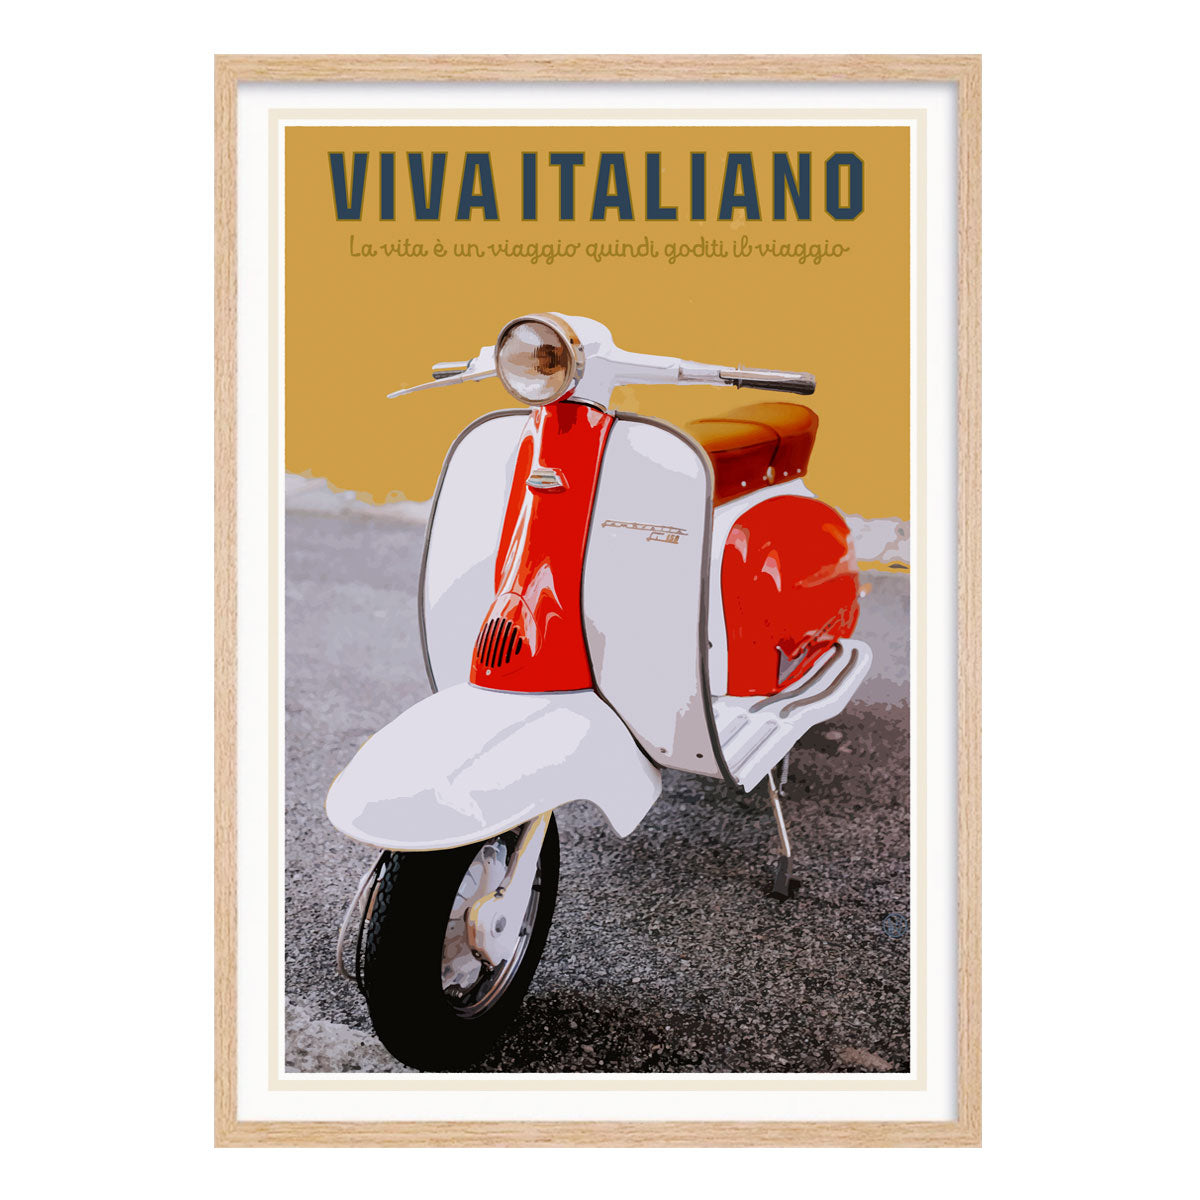 Viva Italia Lambretta retro vintage poster print in oak frame by Places We Luv